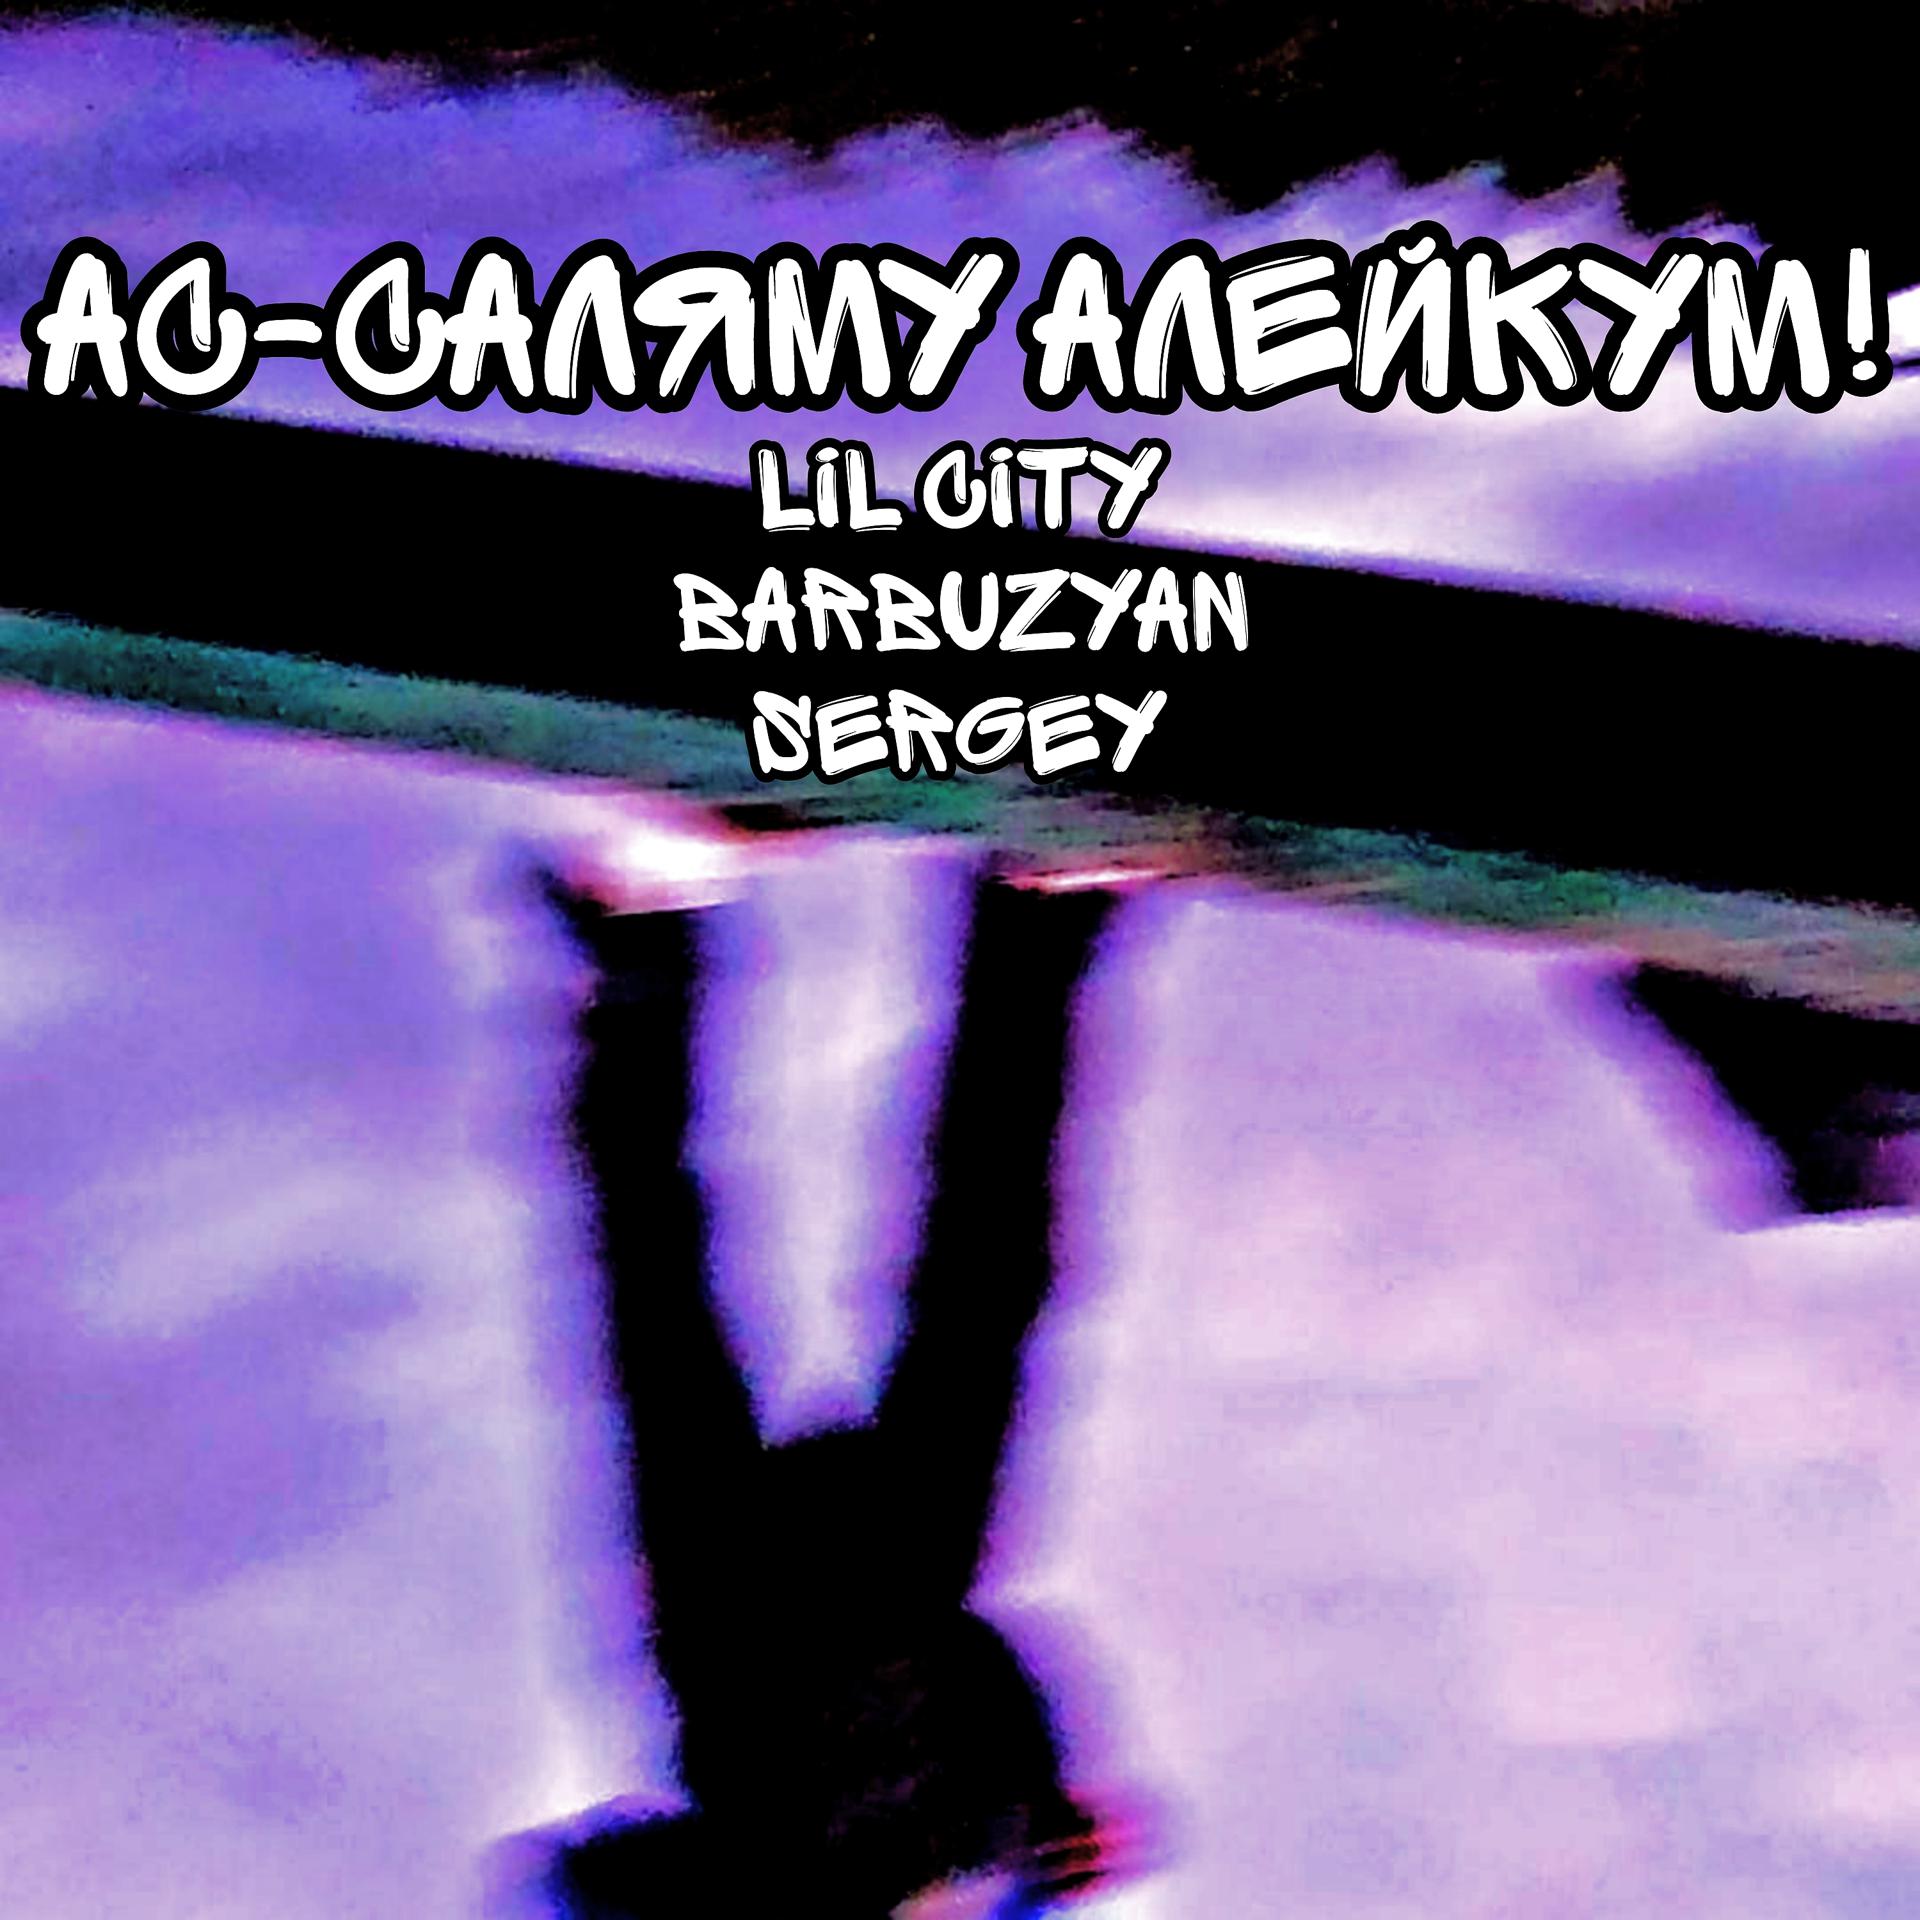 Постер к треку Lil City, BarBUZYAN, Sergey - Салам алейкум